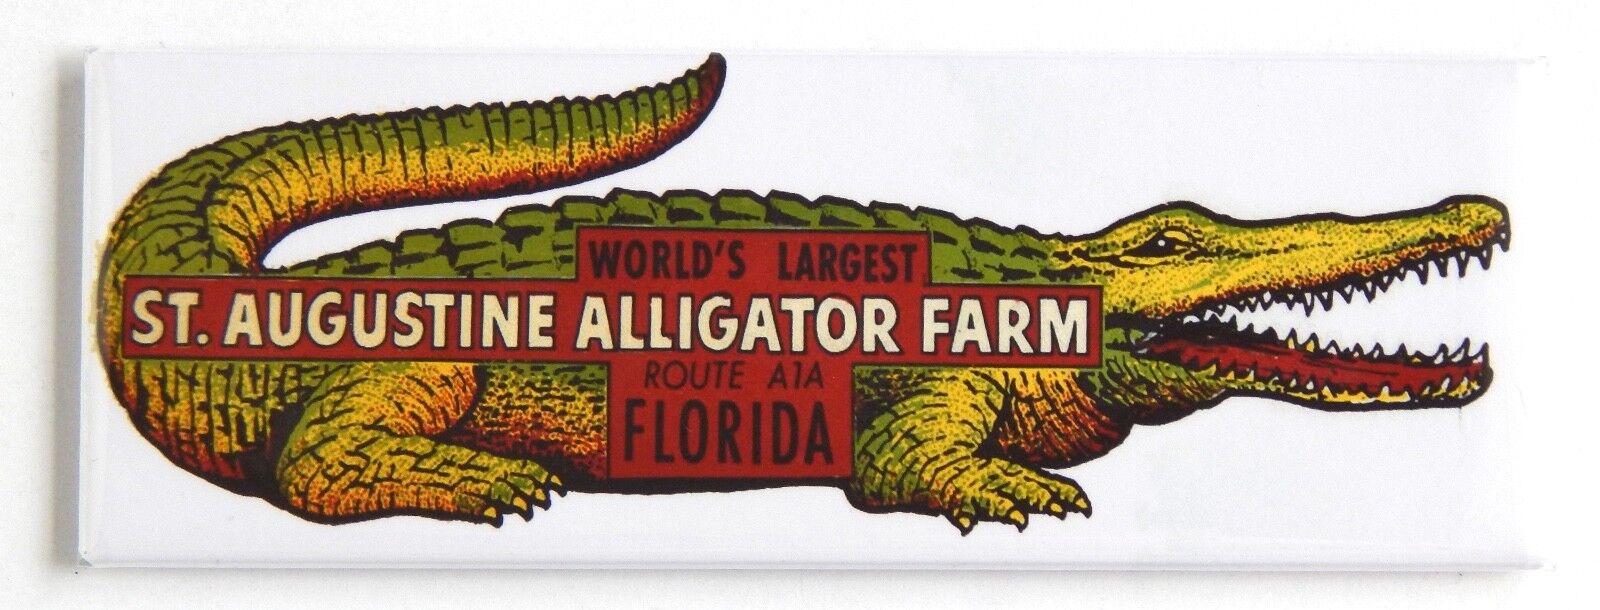 St. Augustine Alligator Farm FRIDGE MAGNET (1.5 x 4.5 inches) florida sign